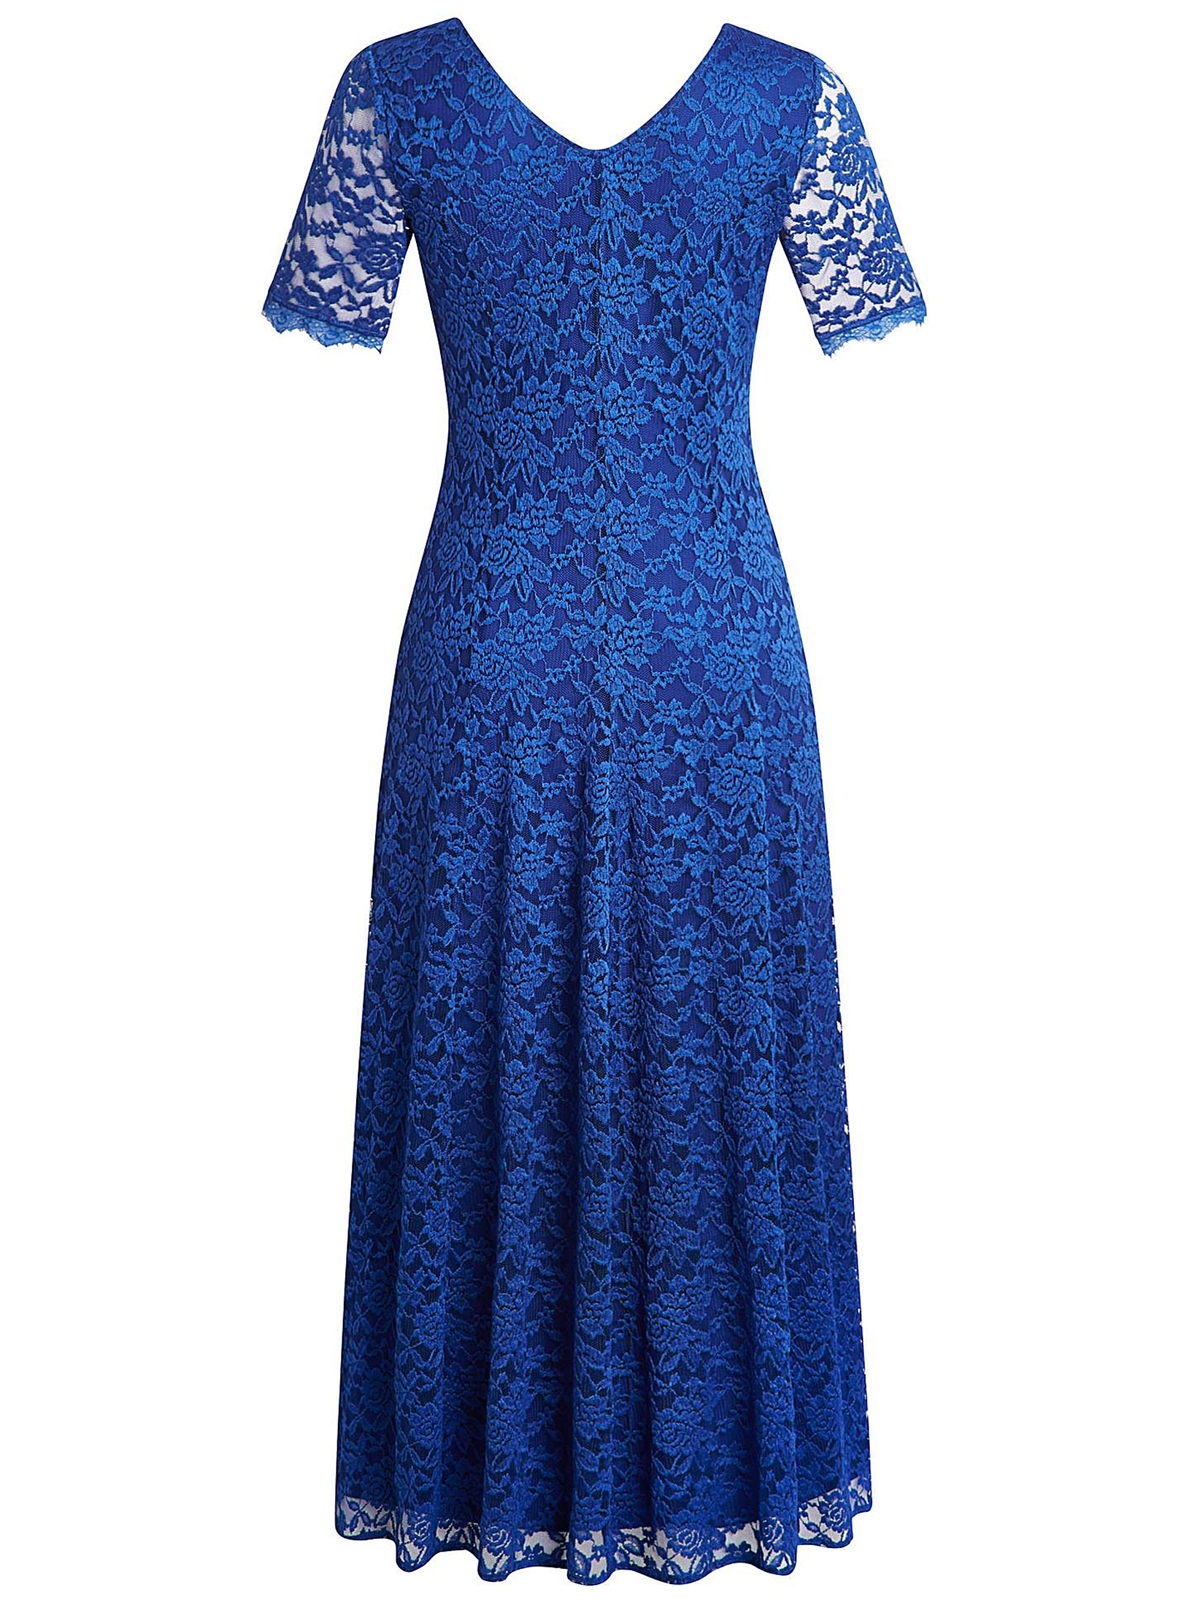 Joanna Hope - - Joanna Hope COBALT-BLUE Floral Lace Maxi Dress - Size ...